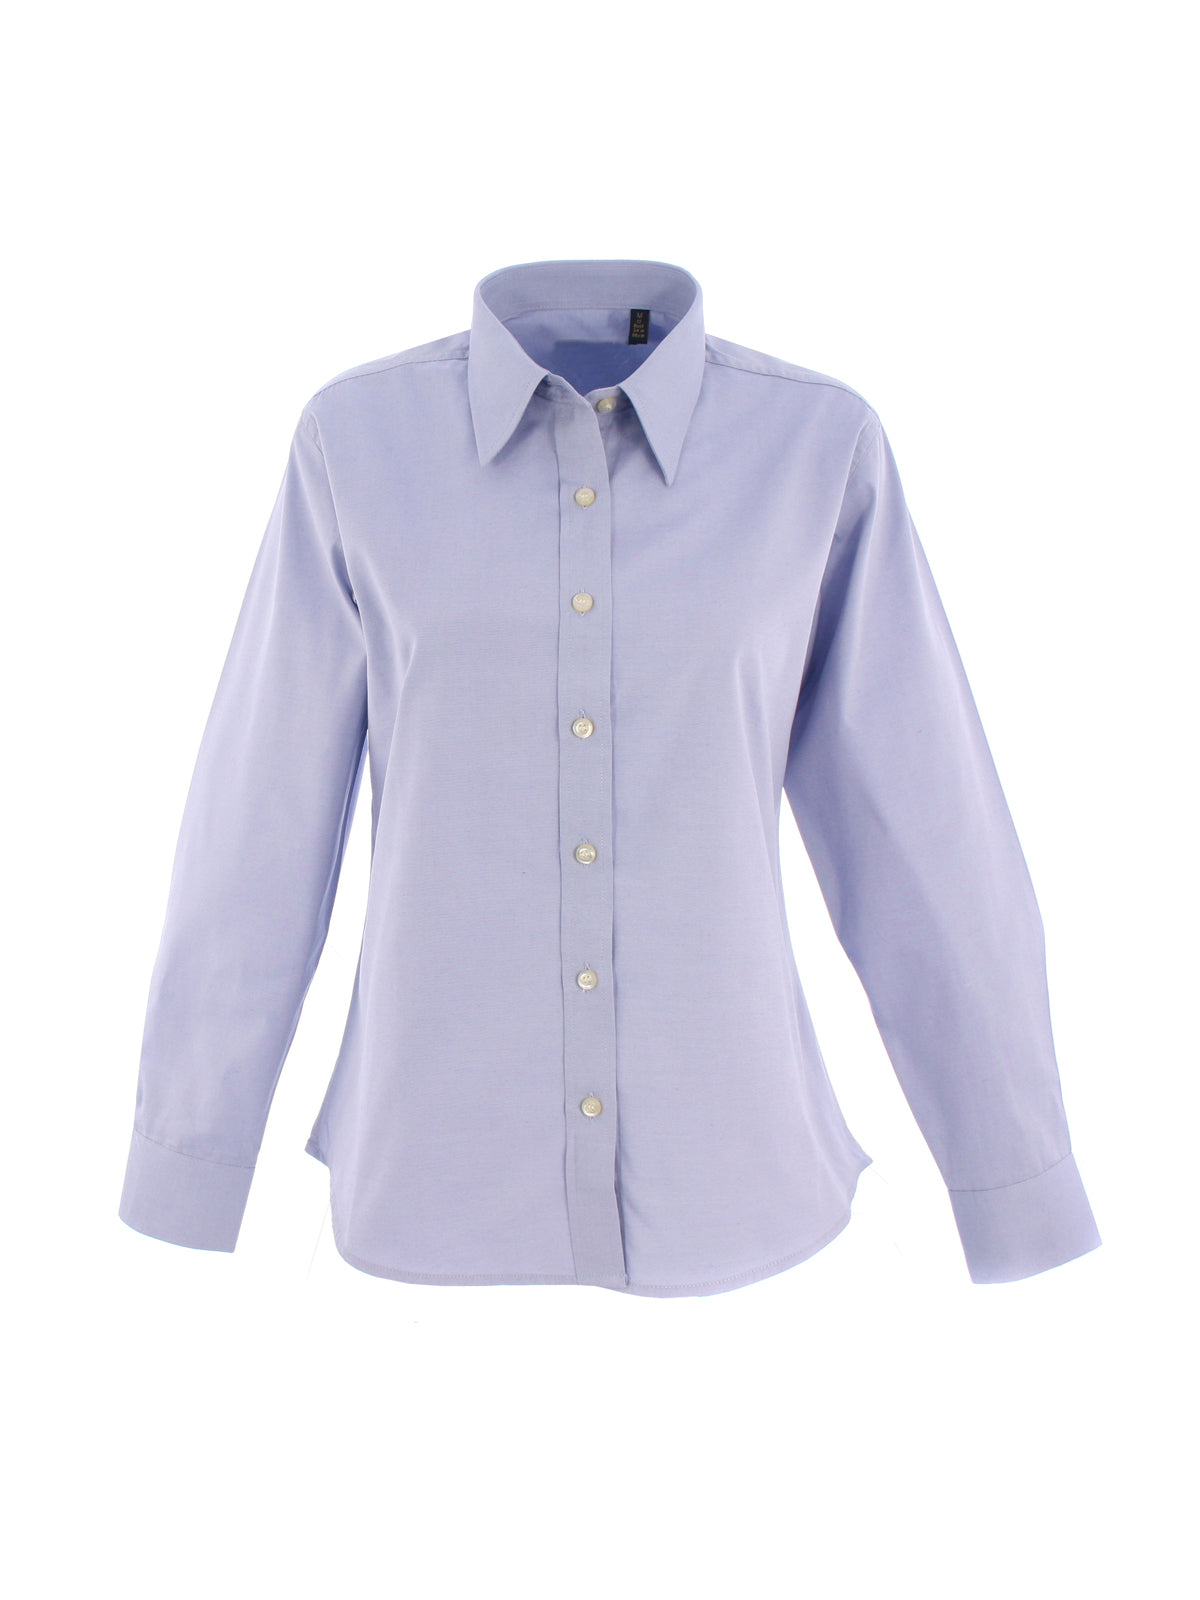 Uneek Ladies Pinpoint Oxford Full Sleeve Shirt UC703 - Light Blue